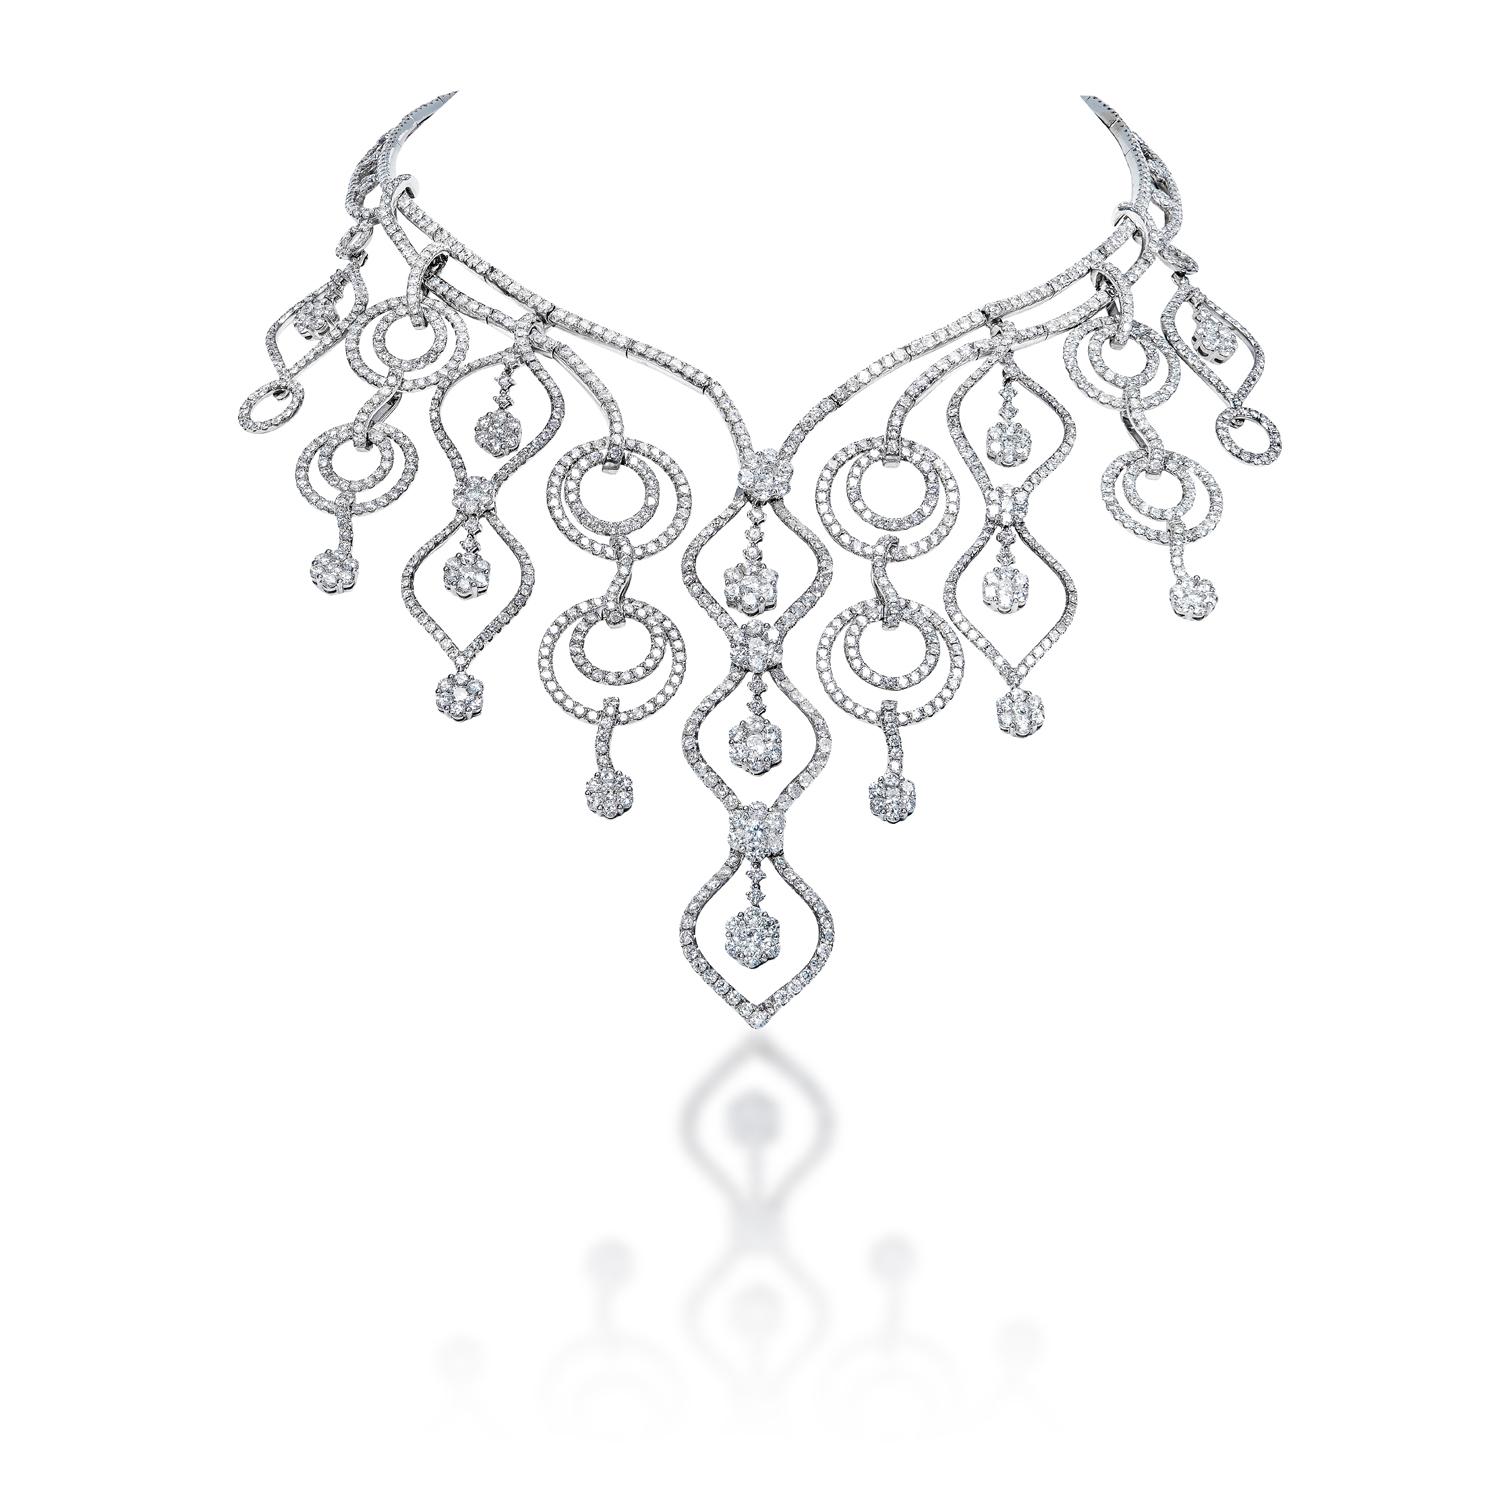 Diamond Necklace:

Carat Weight: 44.30 Carats
Shape: Round Brilliant Cut
Metal: 14 Karat White Gold
Style: Chain Necklace